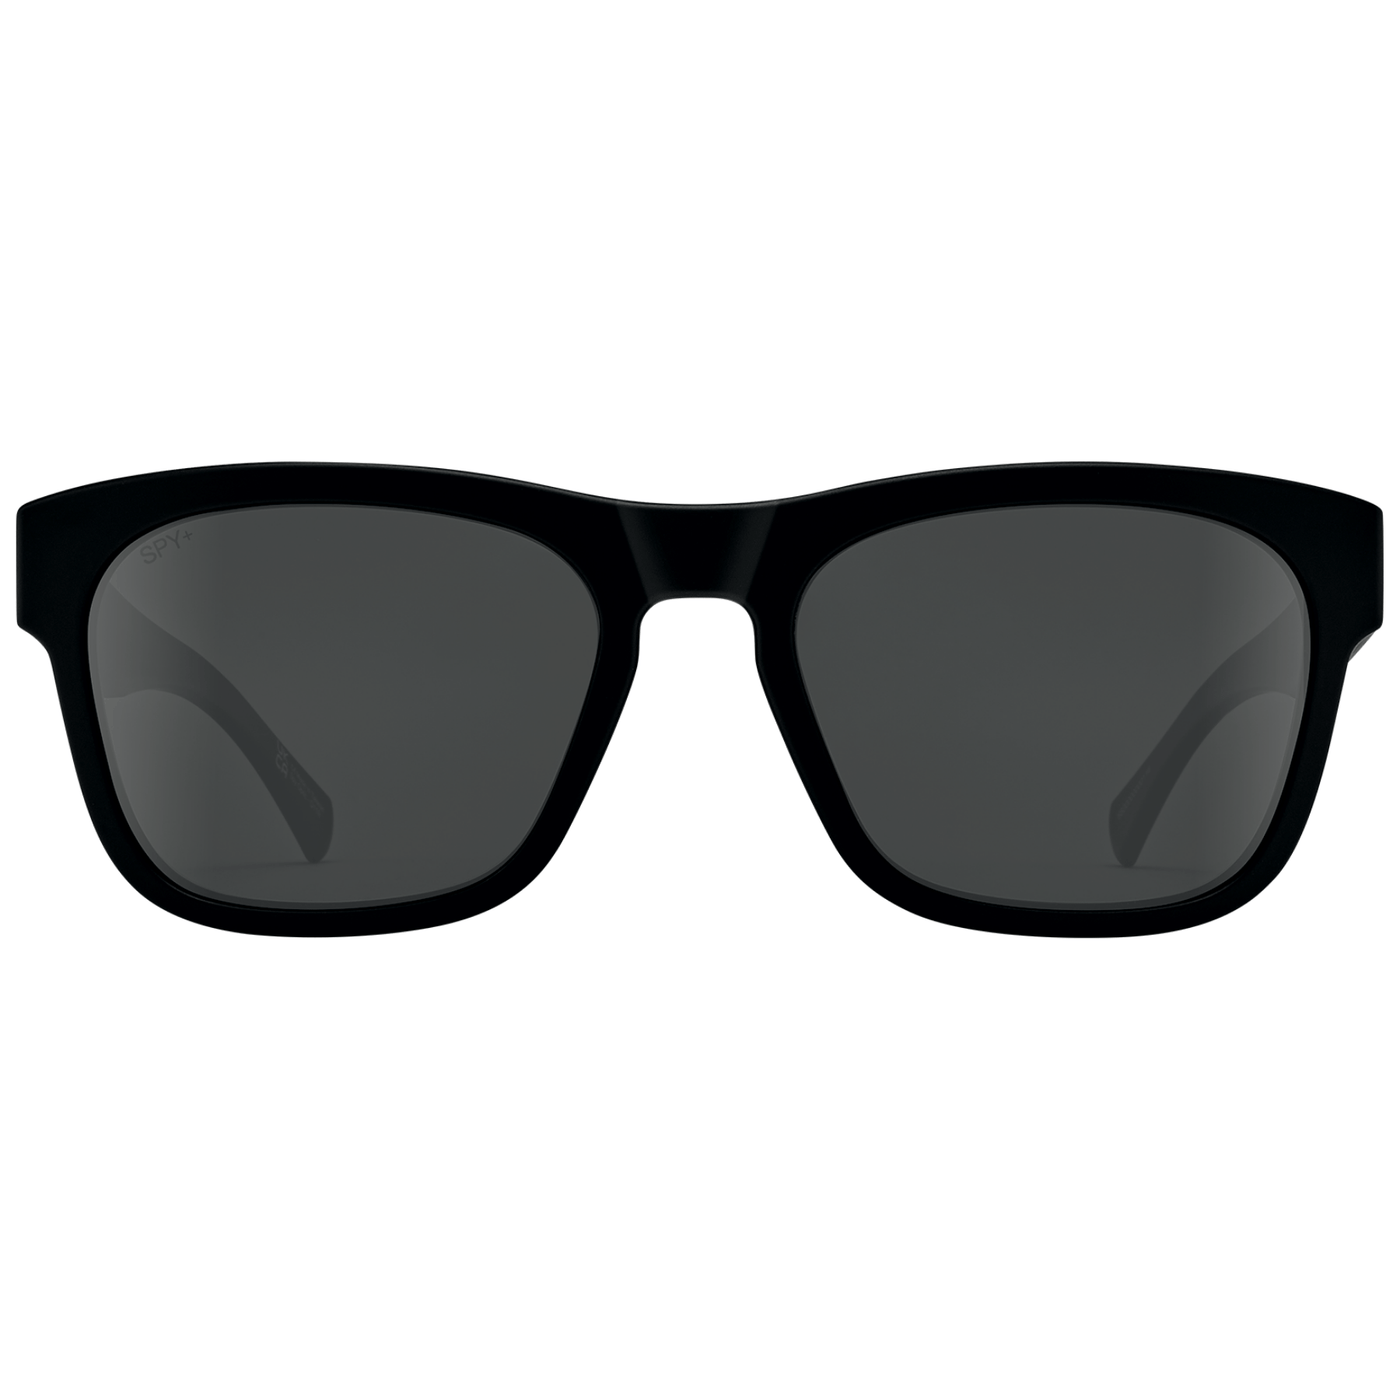 SPY CROSSWAY Sunglasses - Gray/Matte Black 8Lines Shop - Fast Shipping